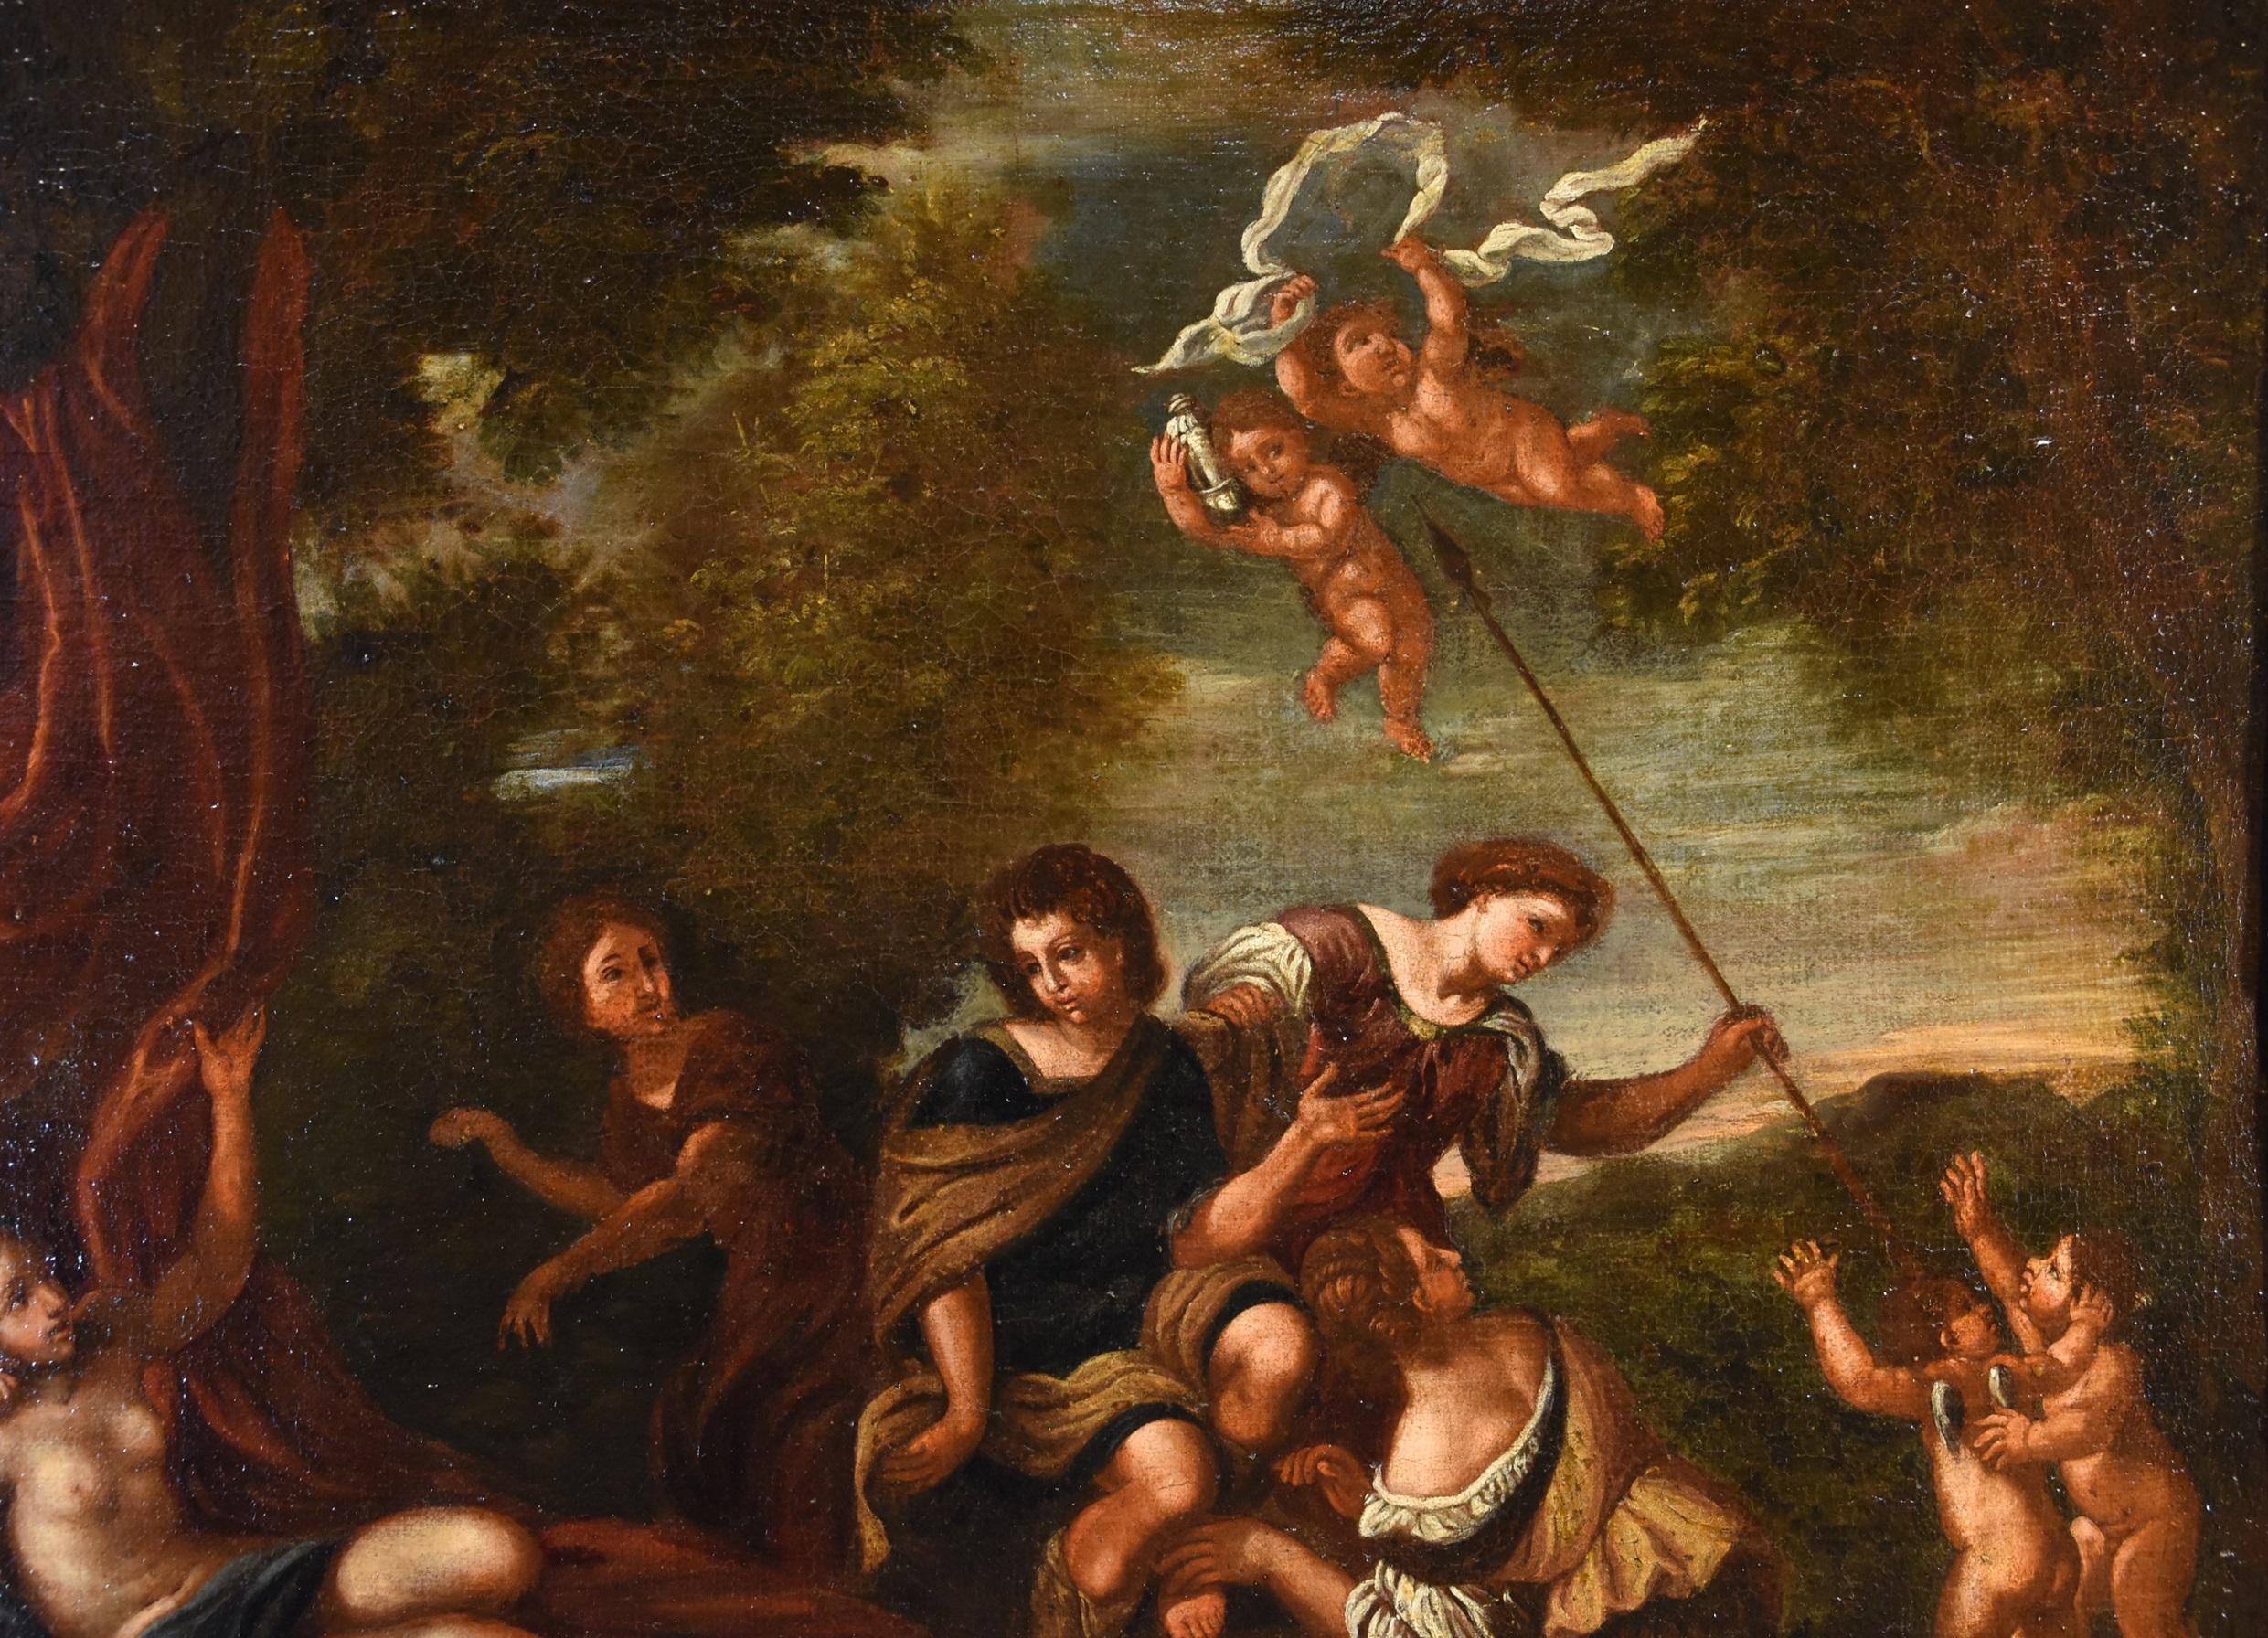 Diana Albani Mythological Paint Oil on canvas 17th Century Old master Italy Art 2